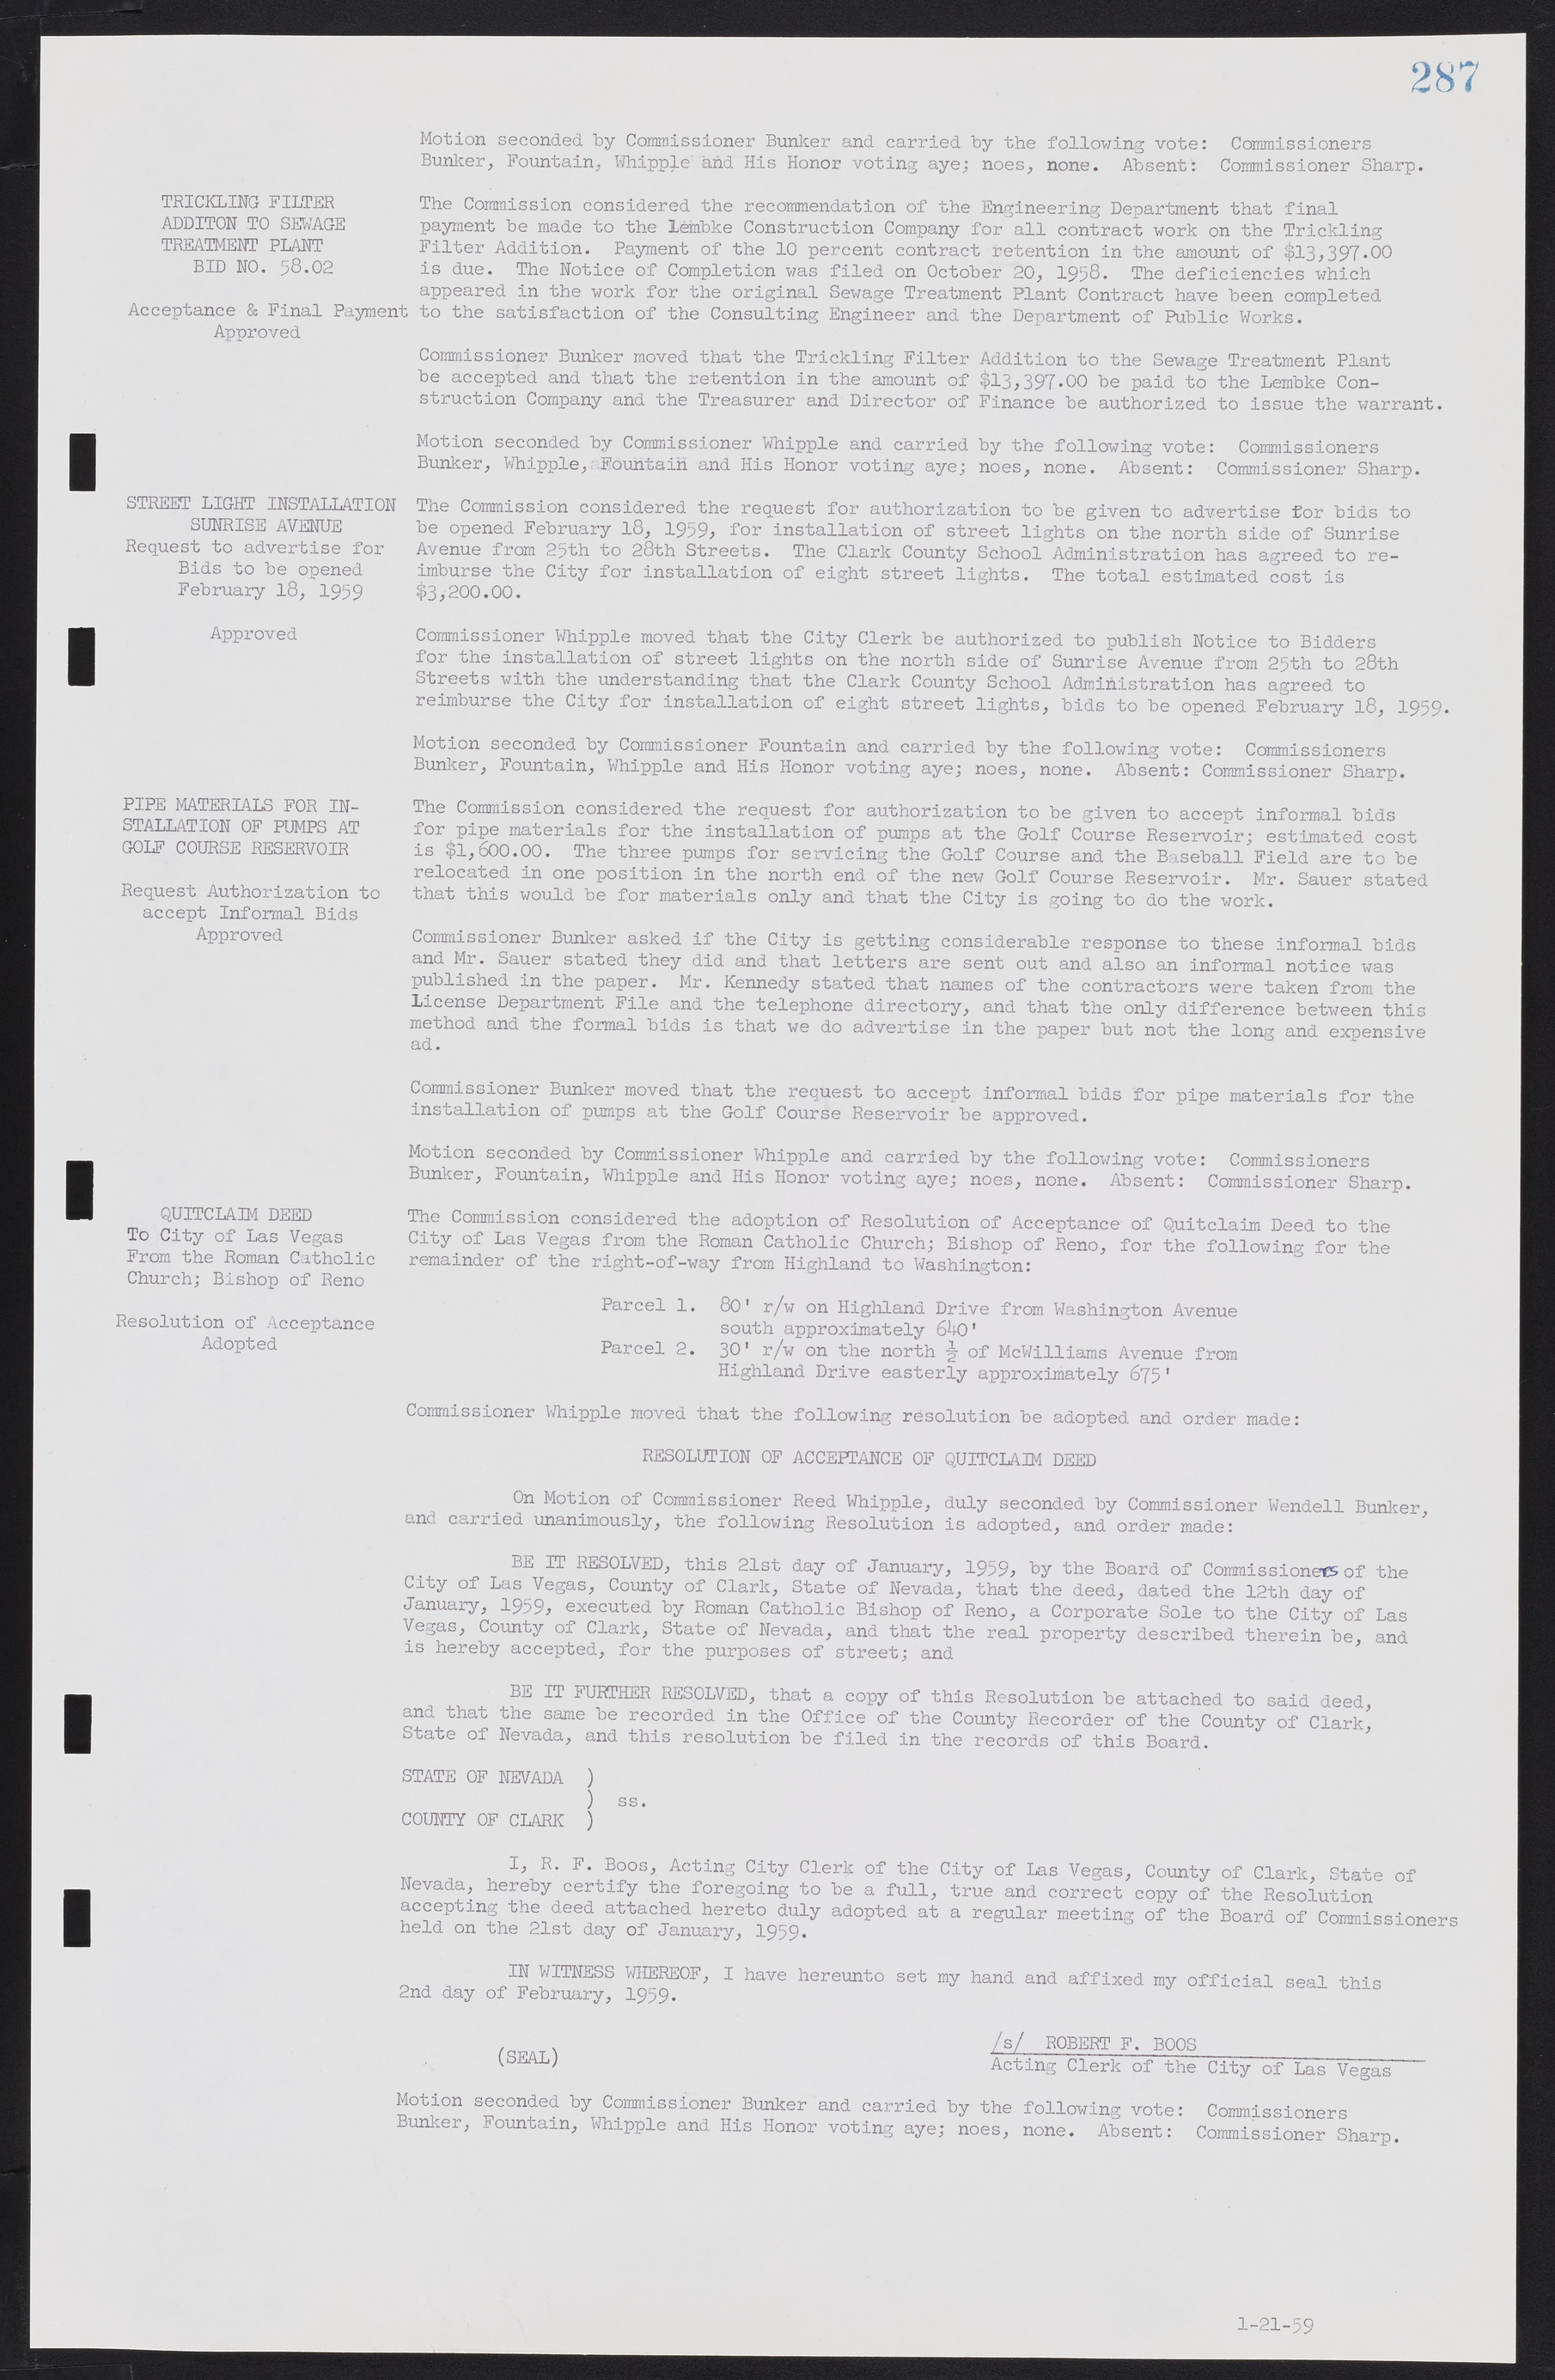 Las Vegas City Commission Minutes, November 20, 1957 to December 2, 1959, lvc000011-295